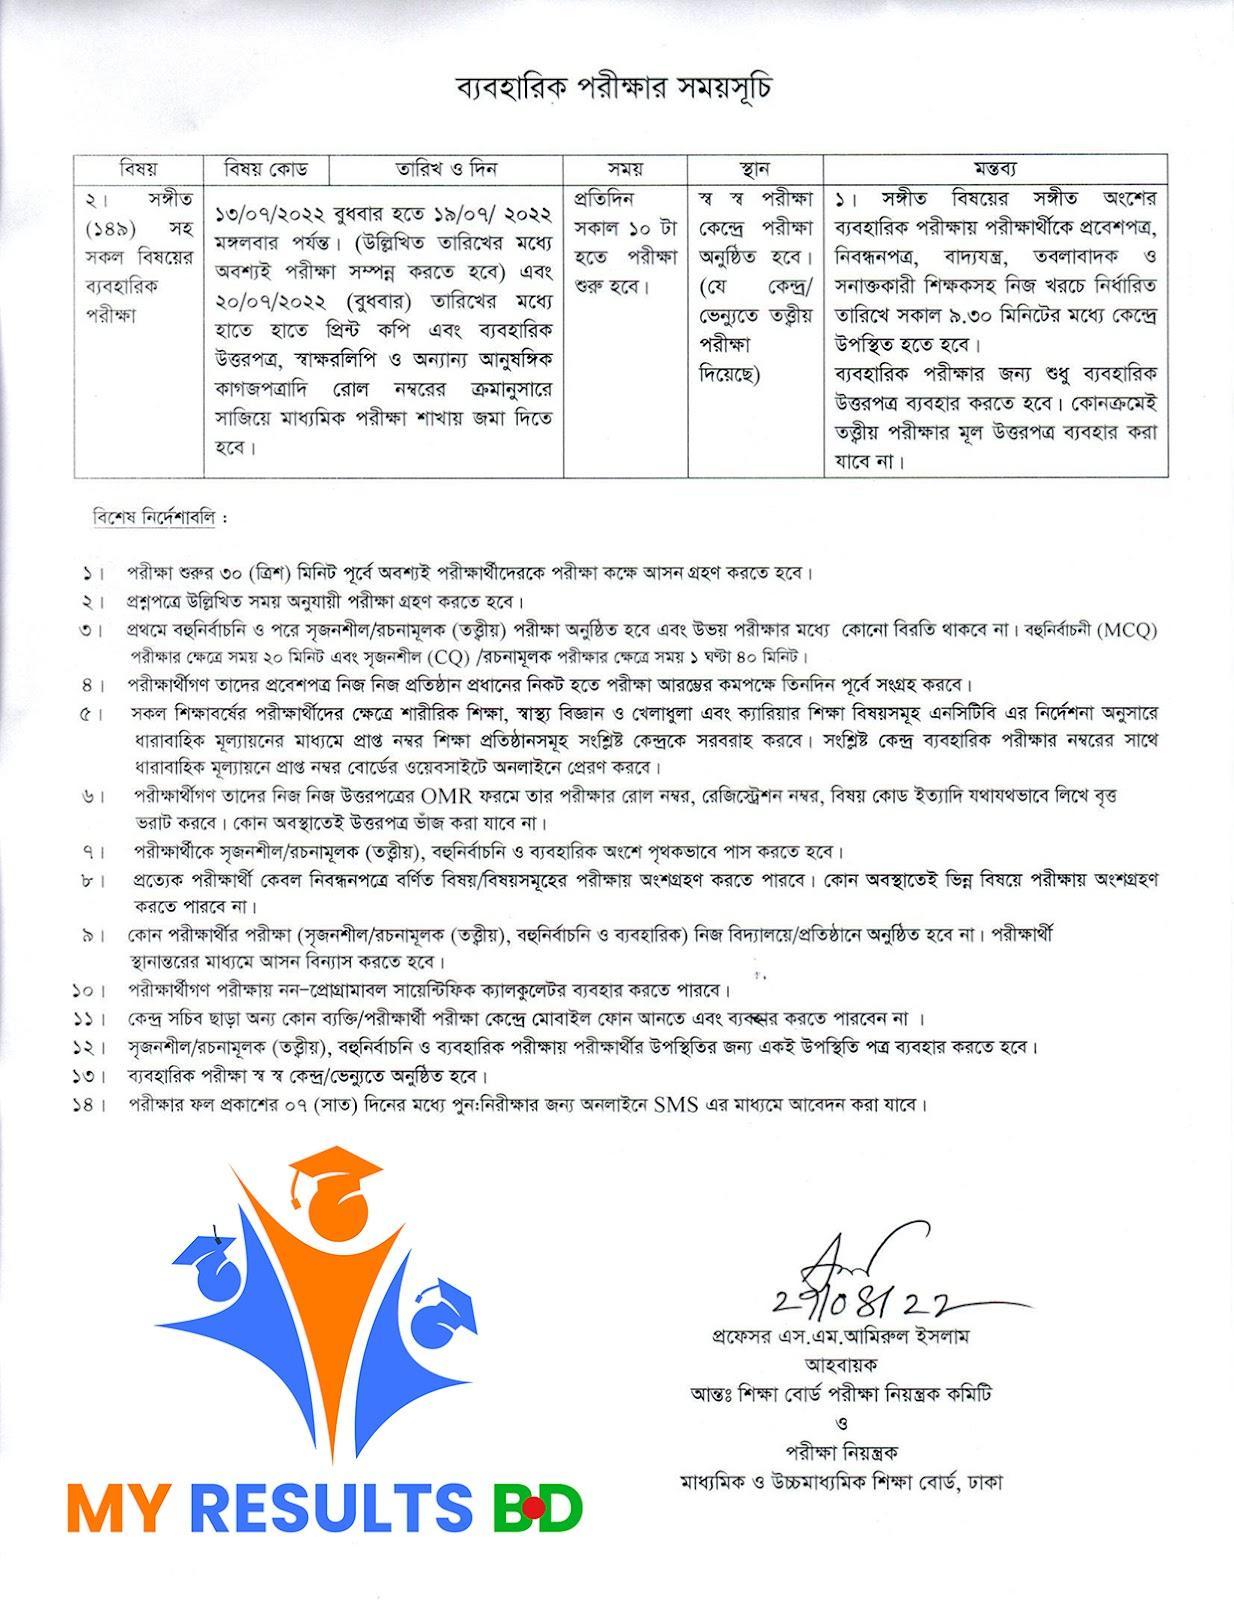 SSC Routine 2022 Jessore Board - SSC Routine PDF Download